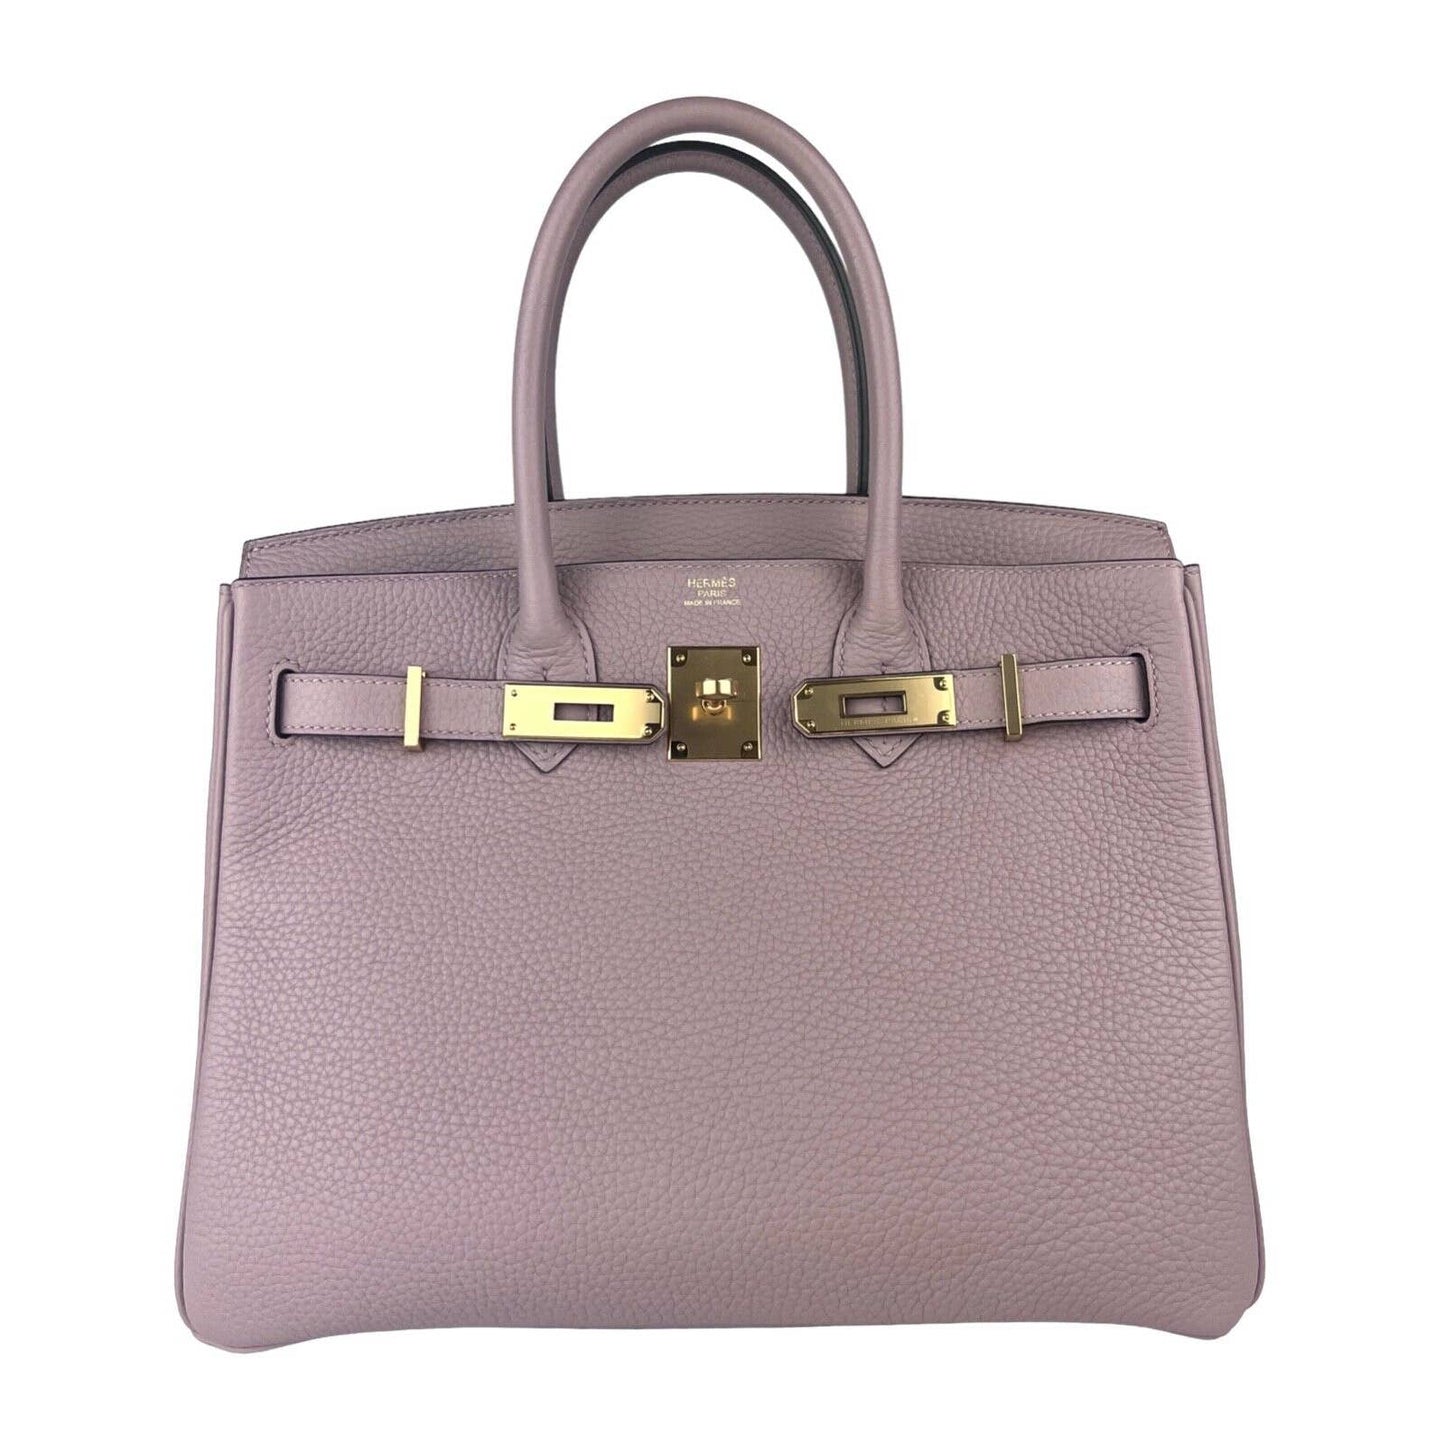 Hermes Birkin 30 Glycine Togo Leather GoldHardware Handbag Bag RARE